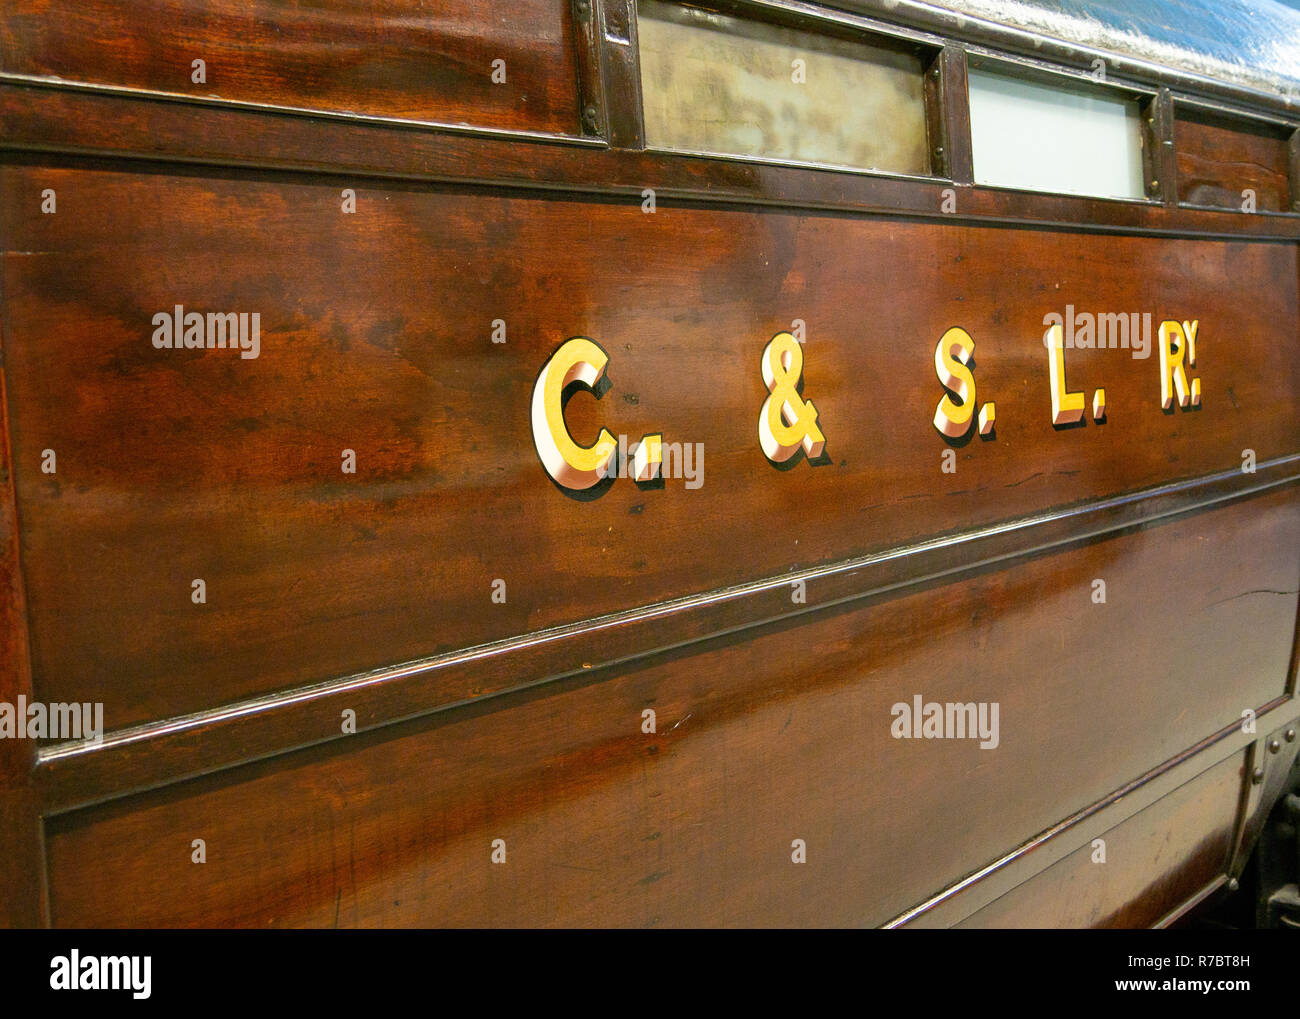 Vintage London Underground train carriages, London Transport Museum, London, UK Stock Photo